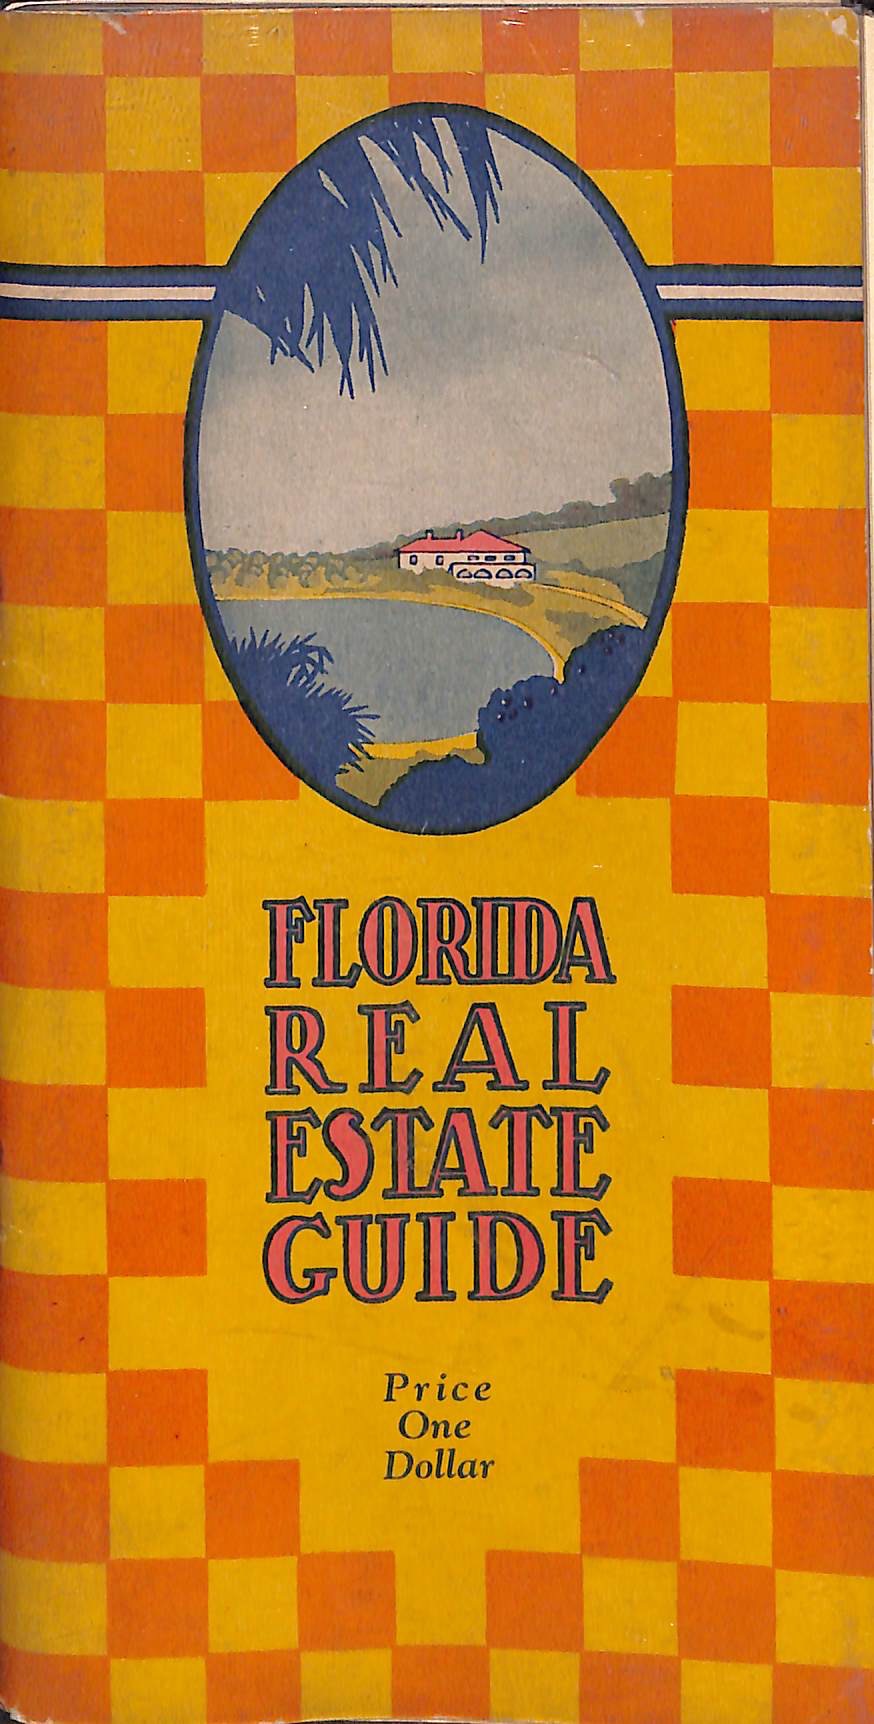 "Florida Real Estate Guide"